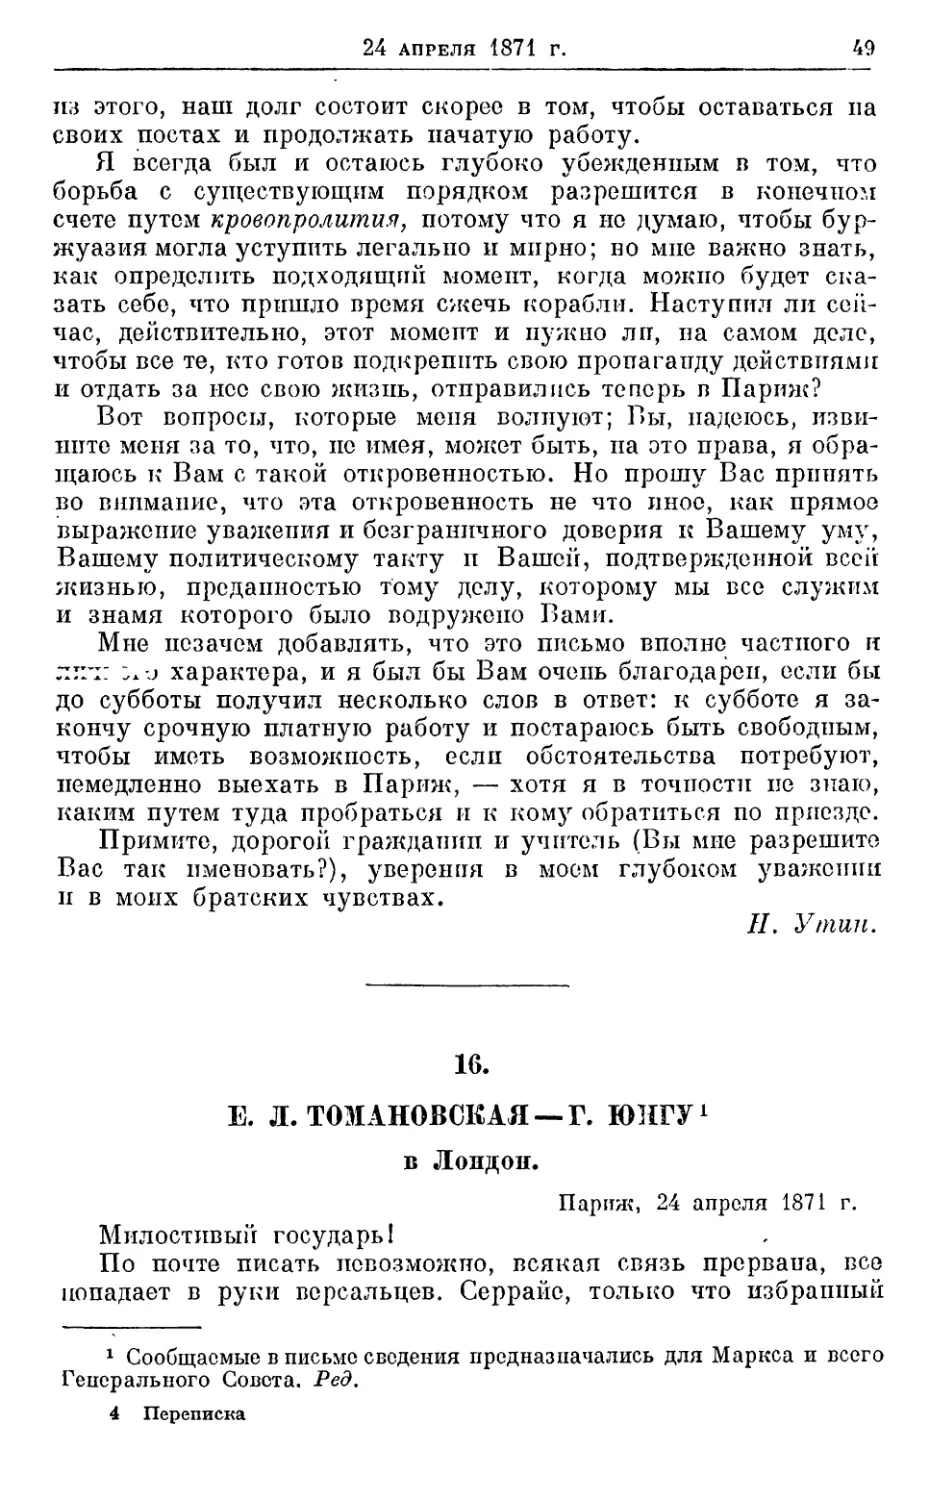 16. Томановская — Г. Юнгу, 24 апреля 1871г